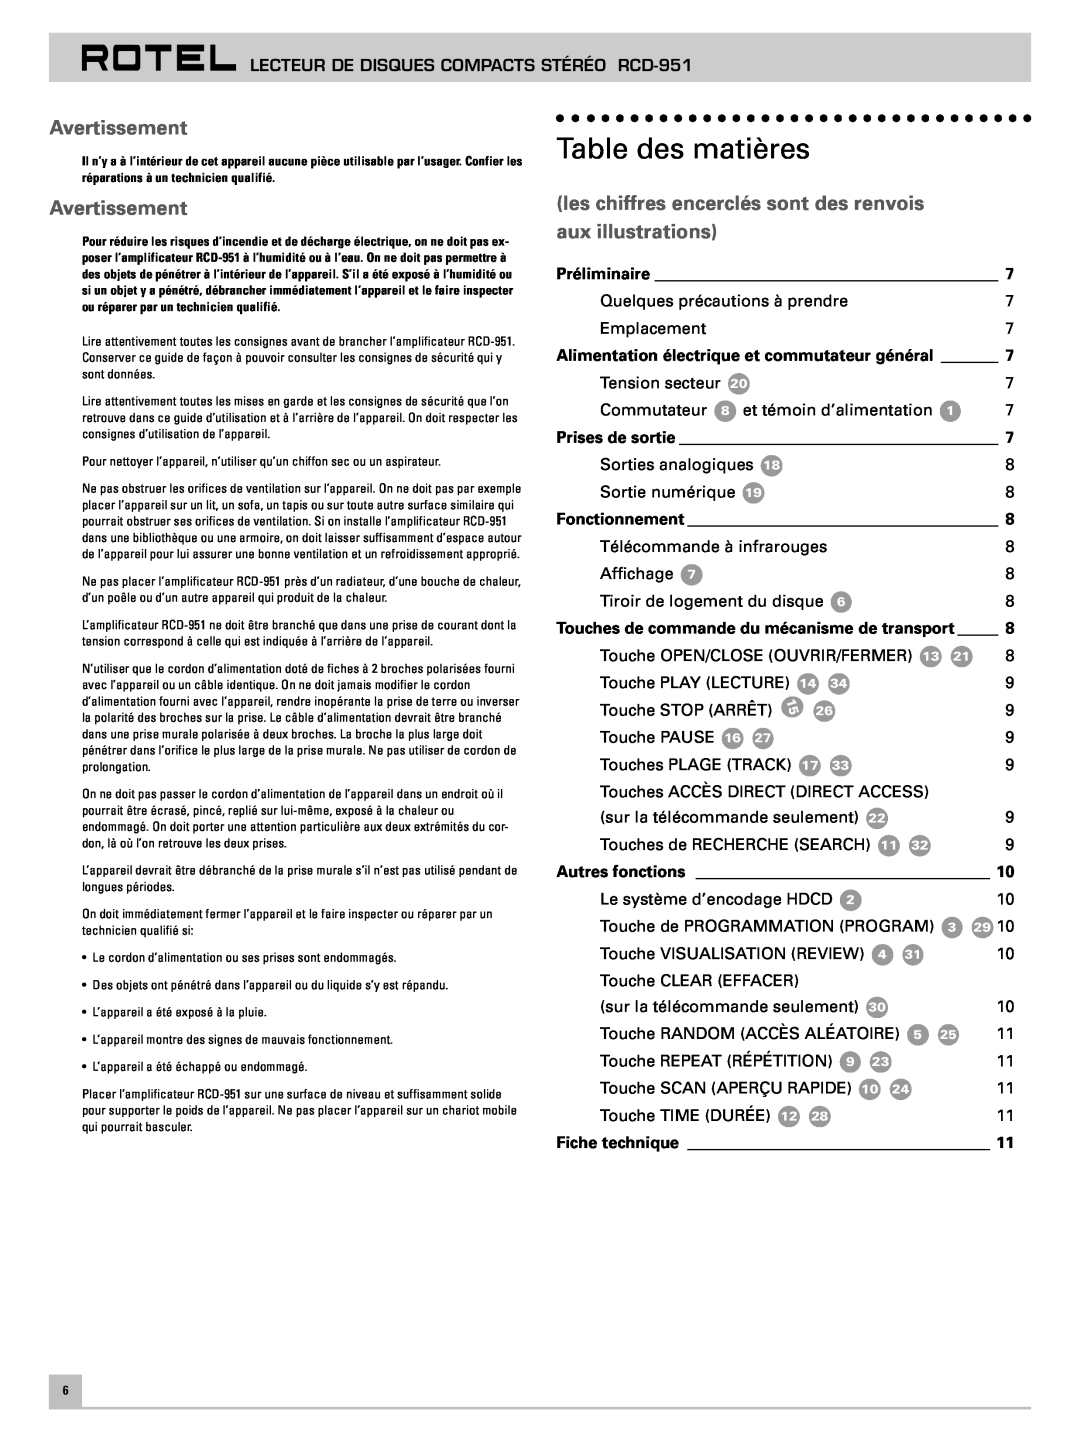 Rotel RCD-951 owner manual Table des matières, Avertissement 